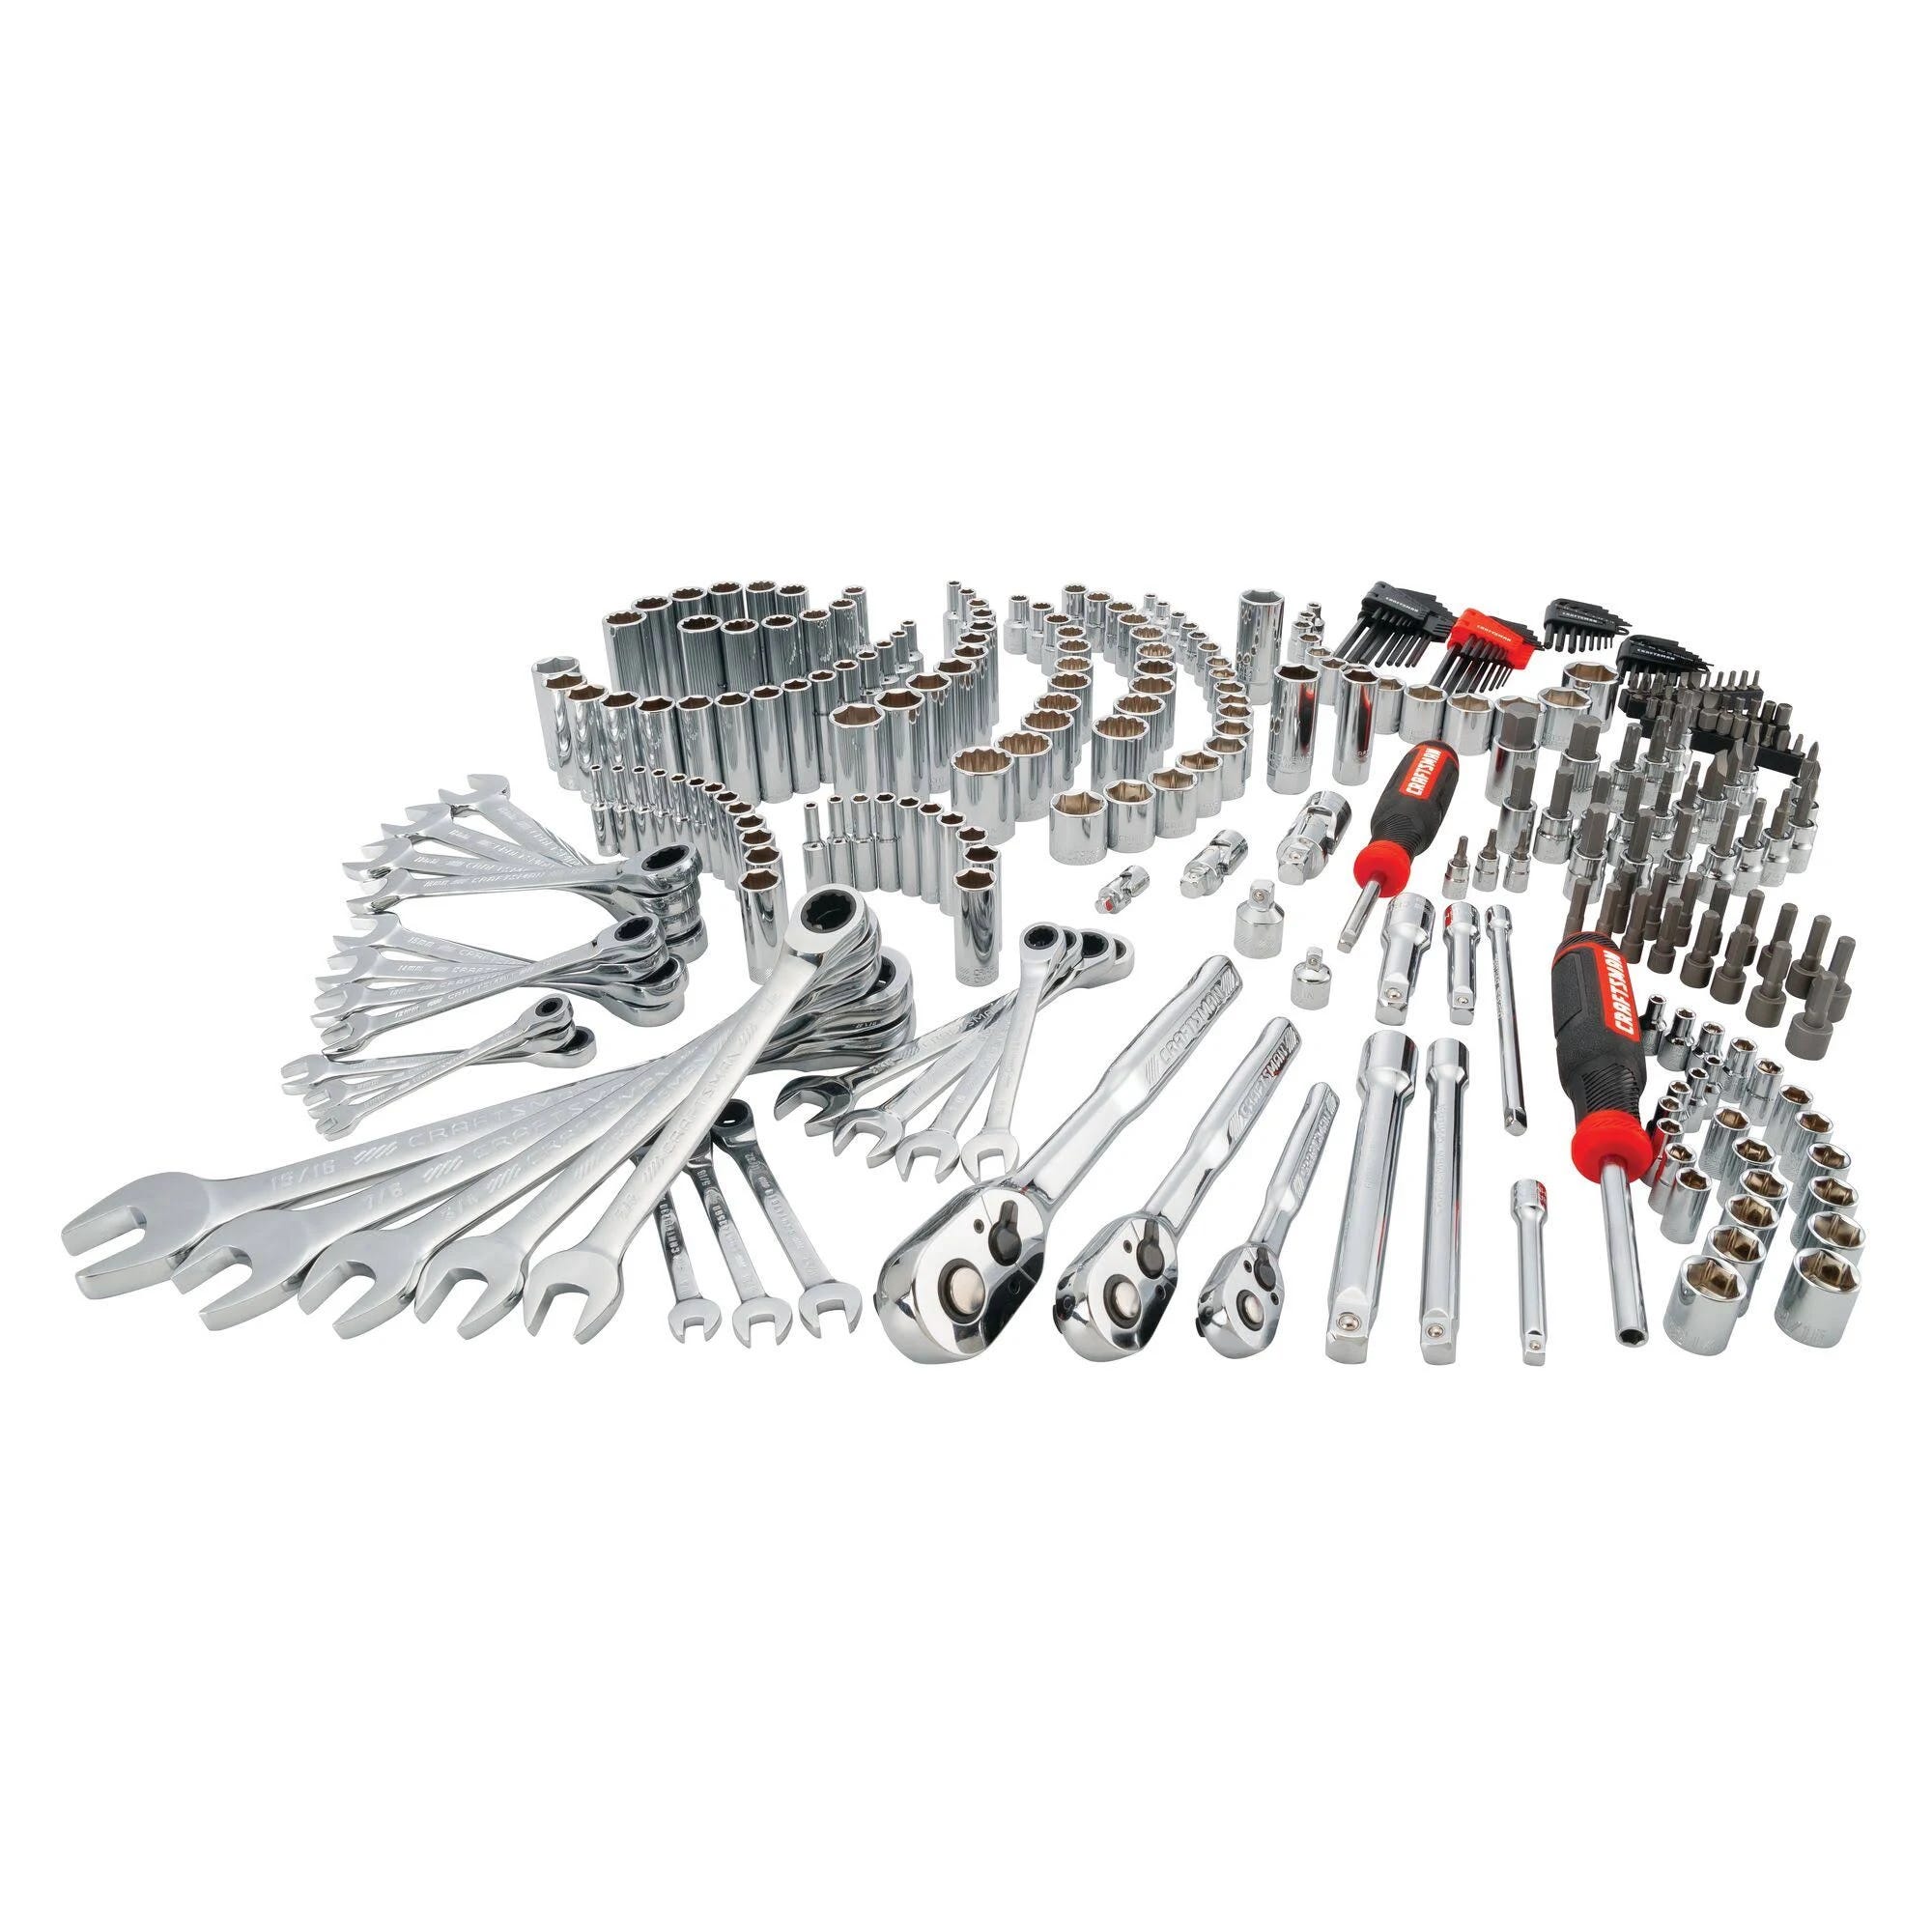 Craftsman Mechanics Tool Set with Wide Size Range | Image